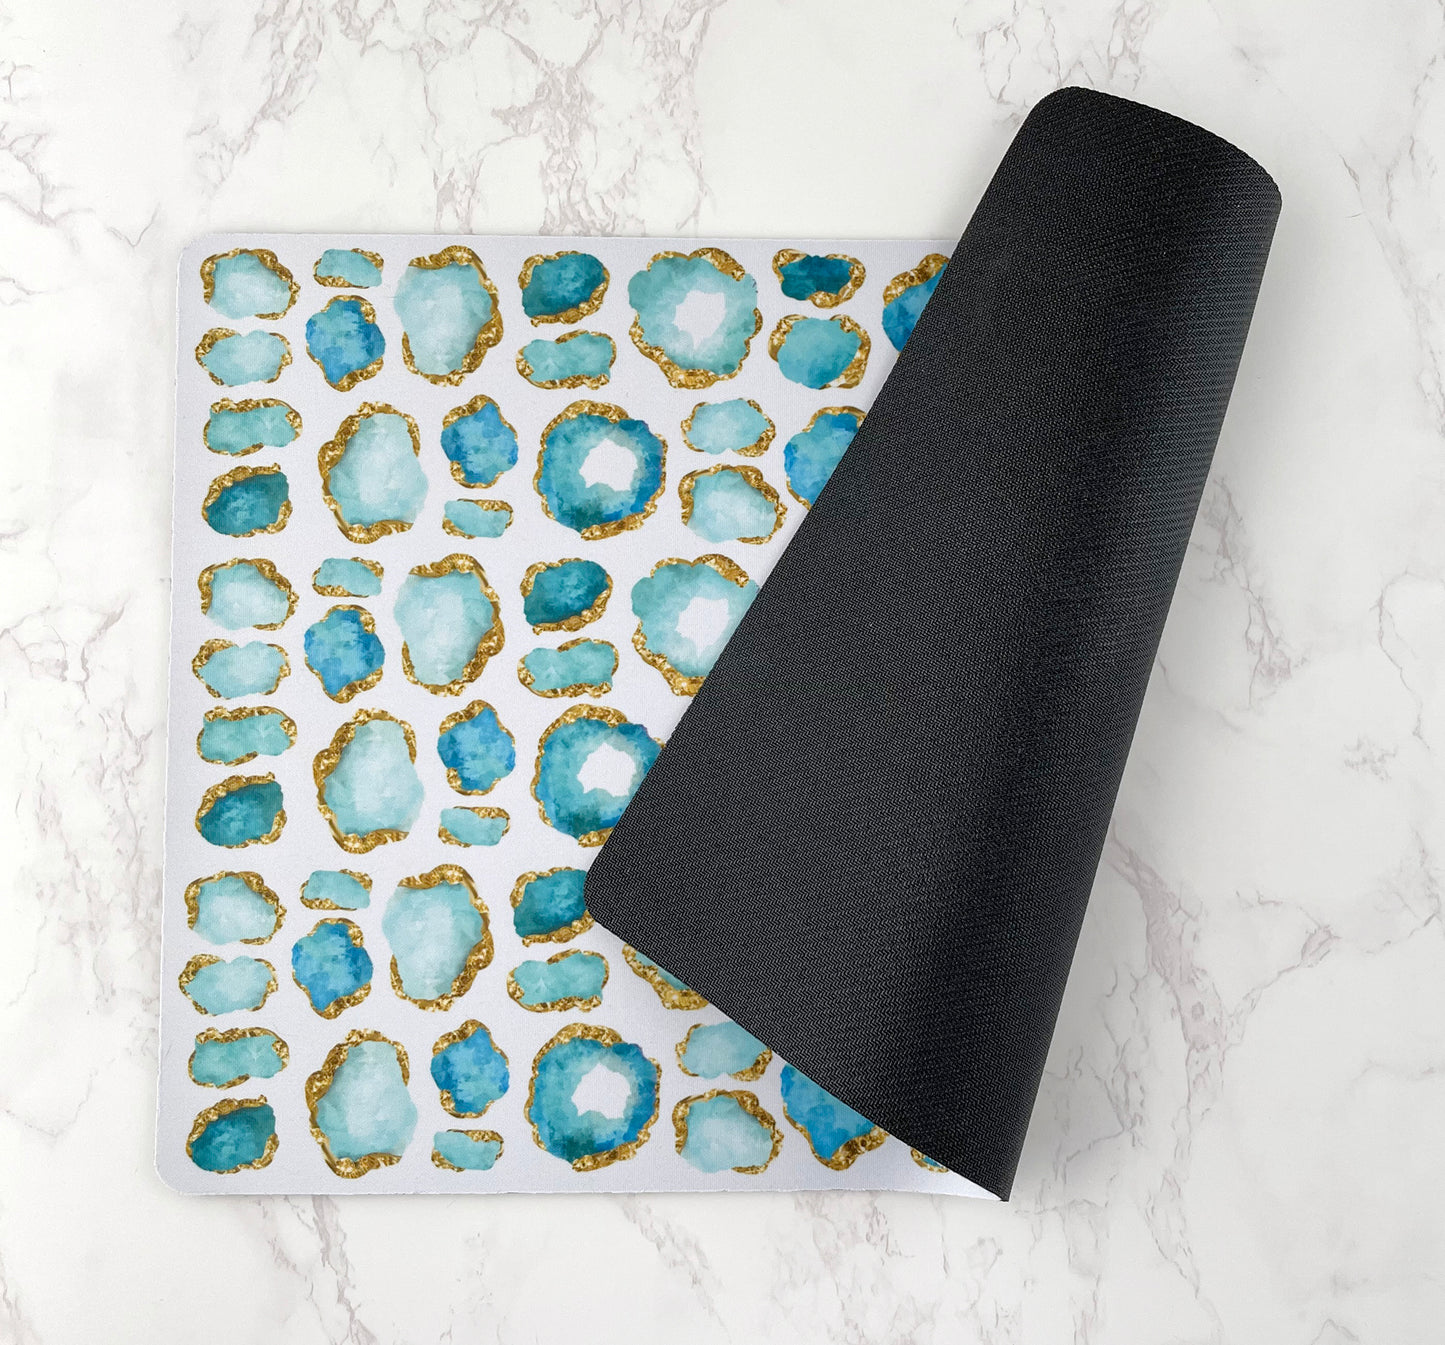 Pet bowl mat with aqua jewel print and rubberized back.